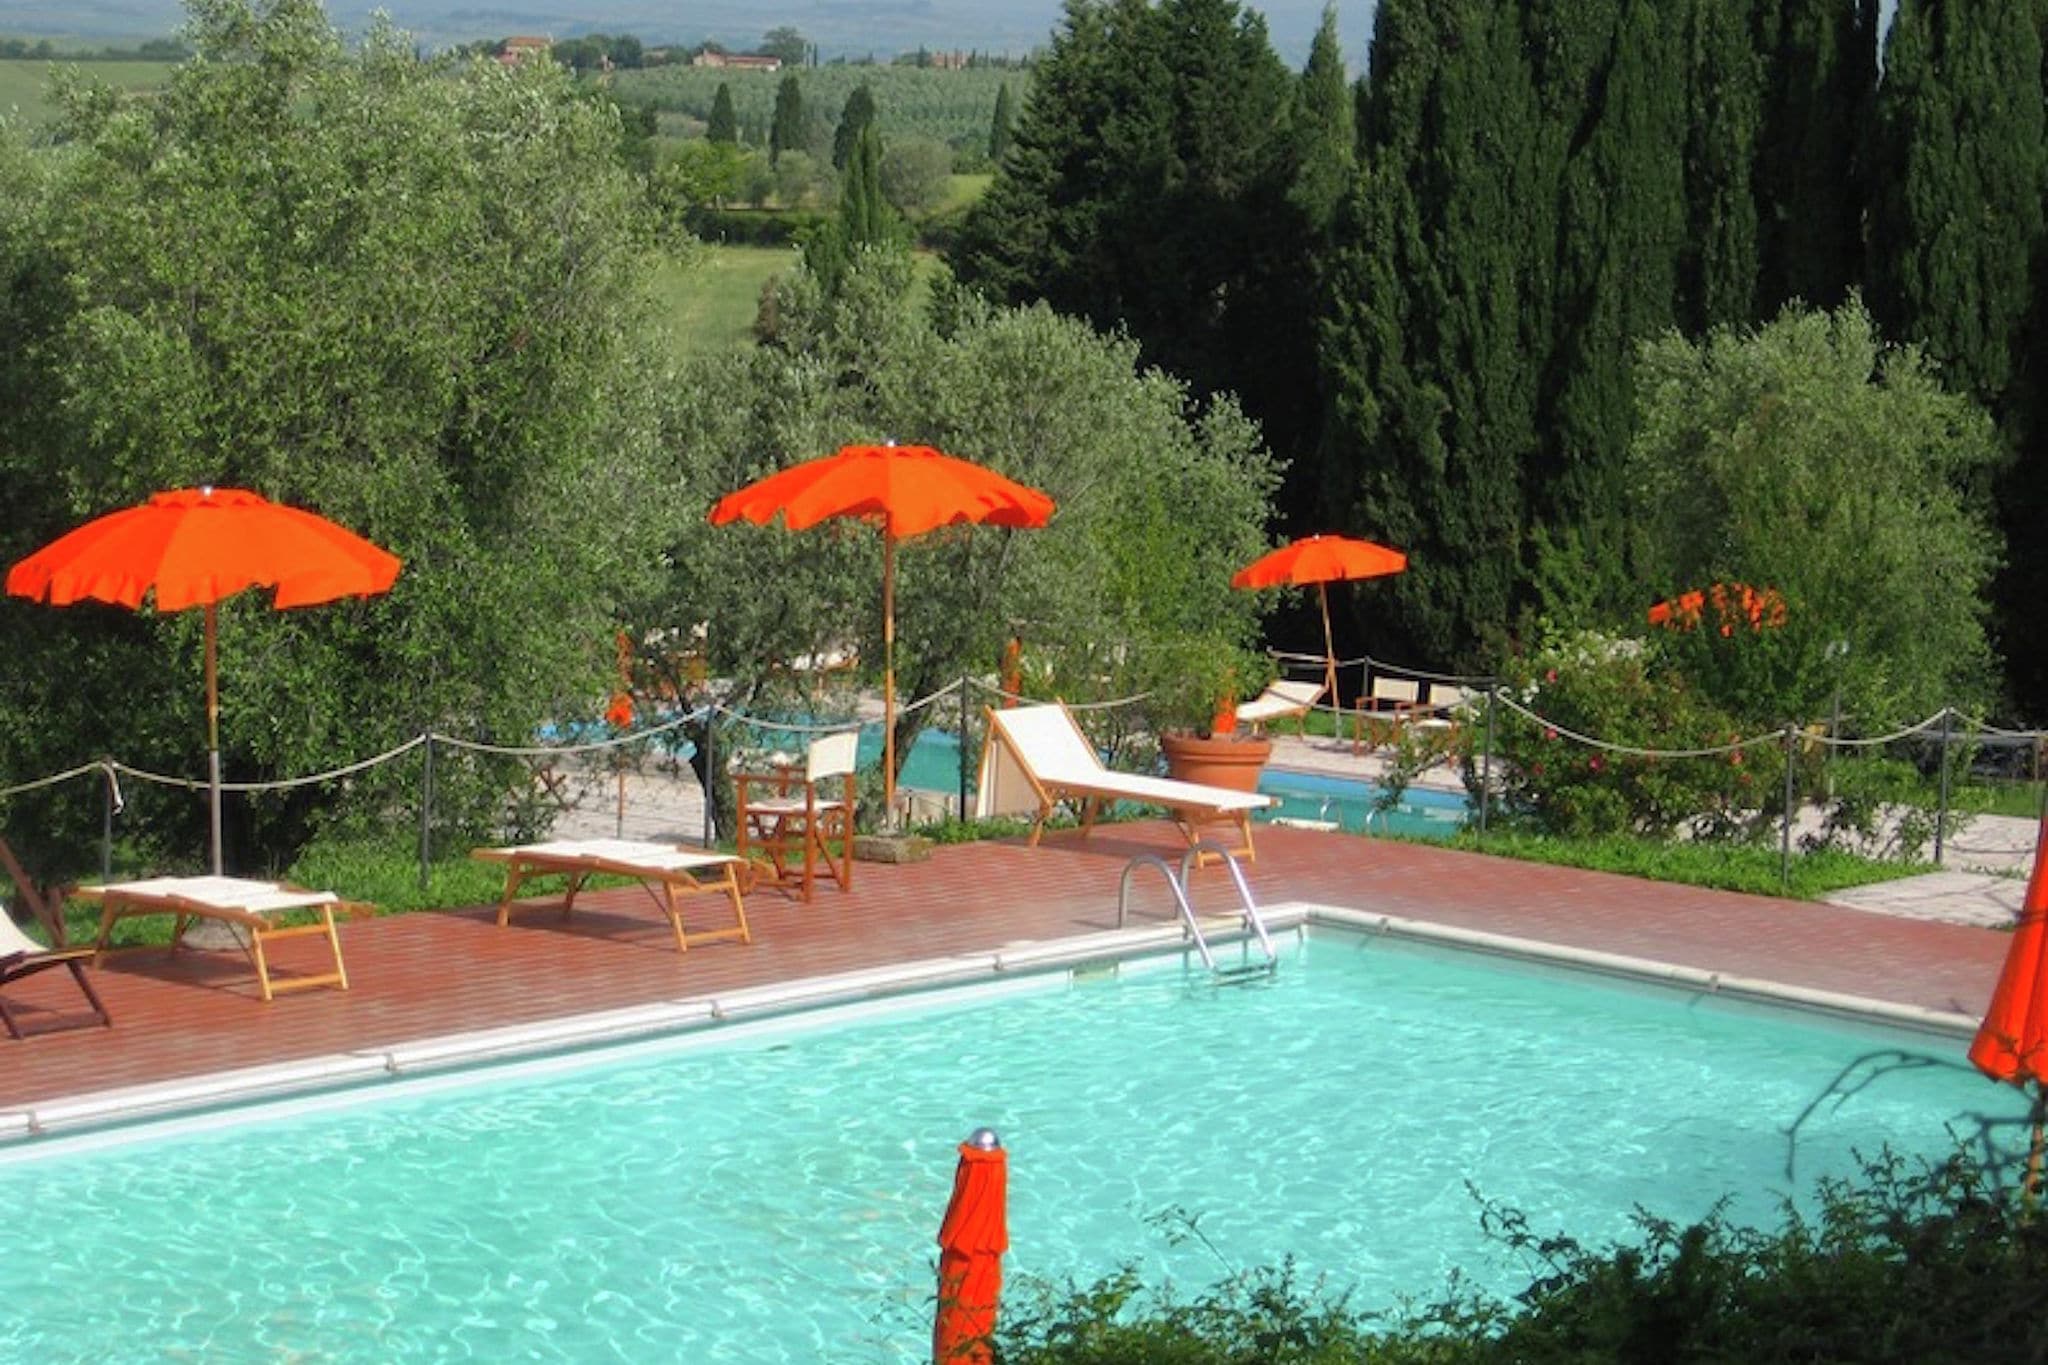 Charmante villa à Trequanda, Italie avec piscine